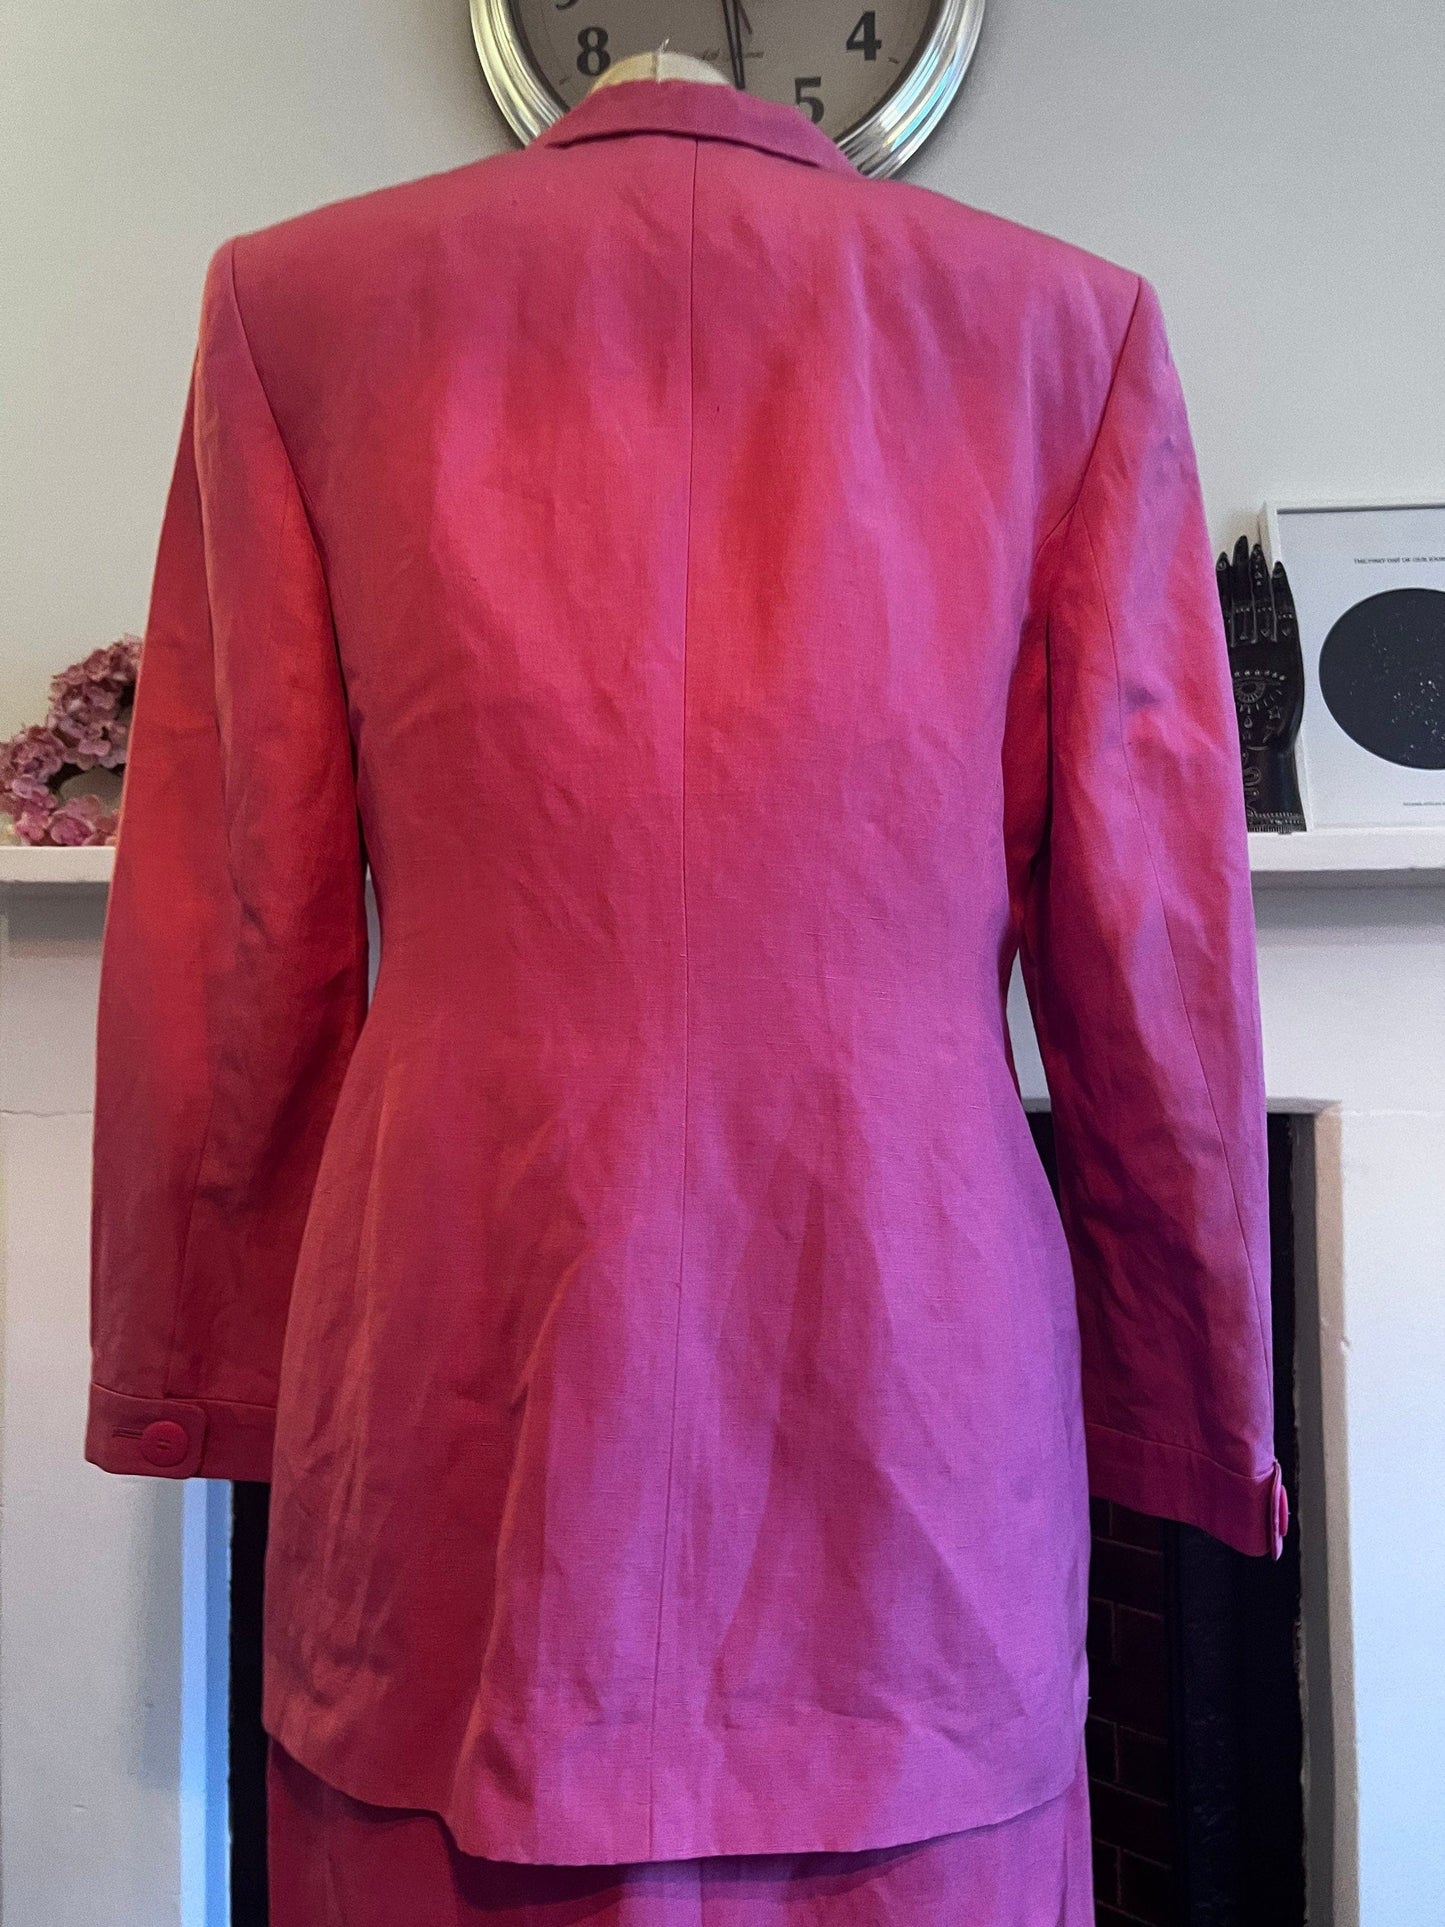 Vintage Silk Suit Linen Skirt Suit - pencil Skirt and longline blazer with pocket details Size UK12 - Pink 1990s